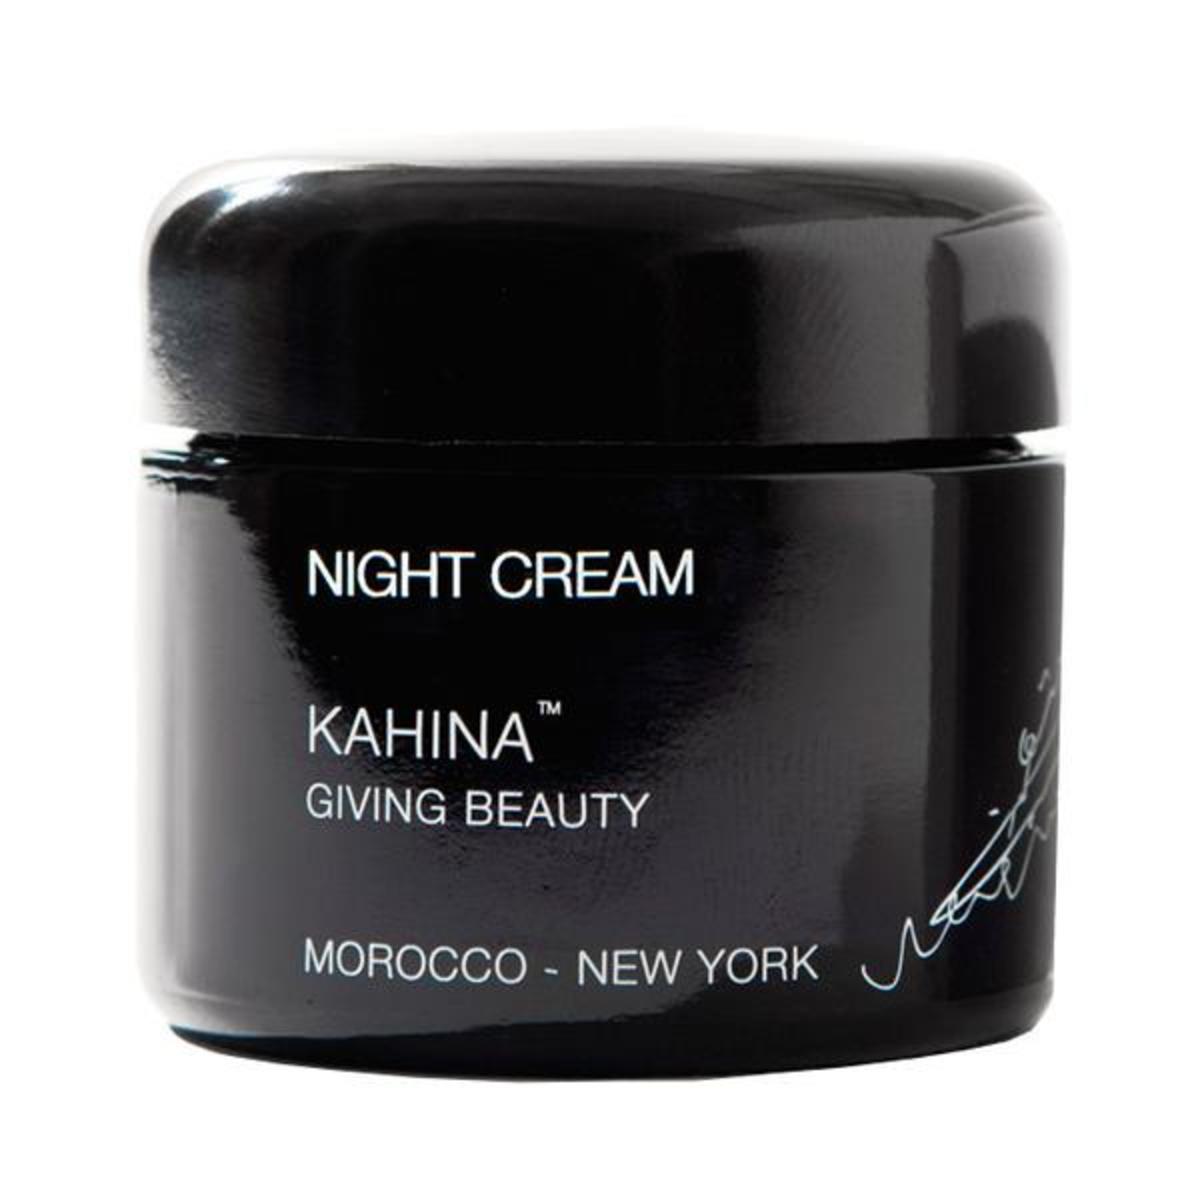 Kahina Giving Beauty Night Cream